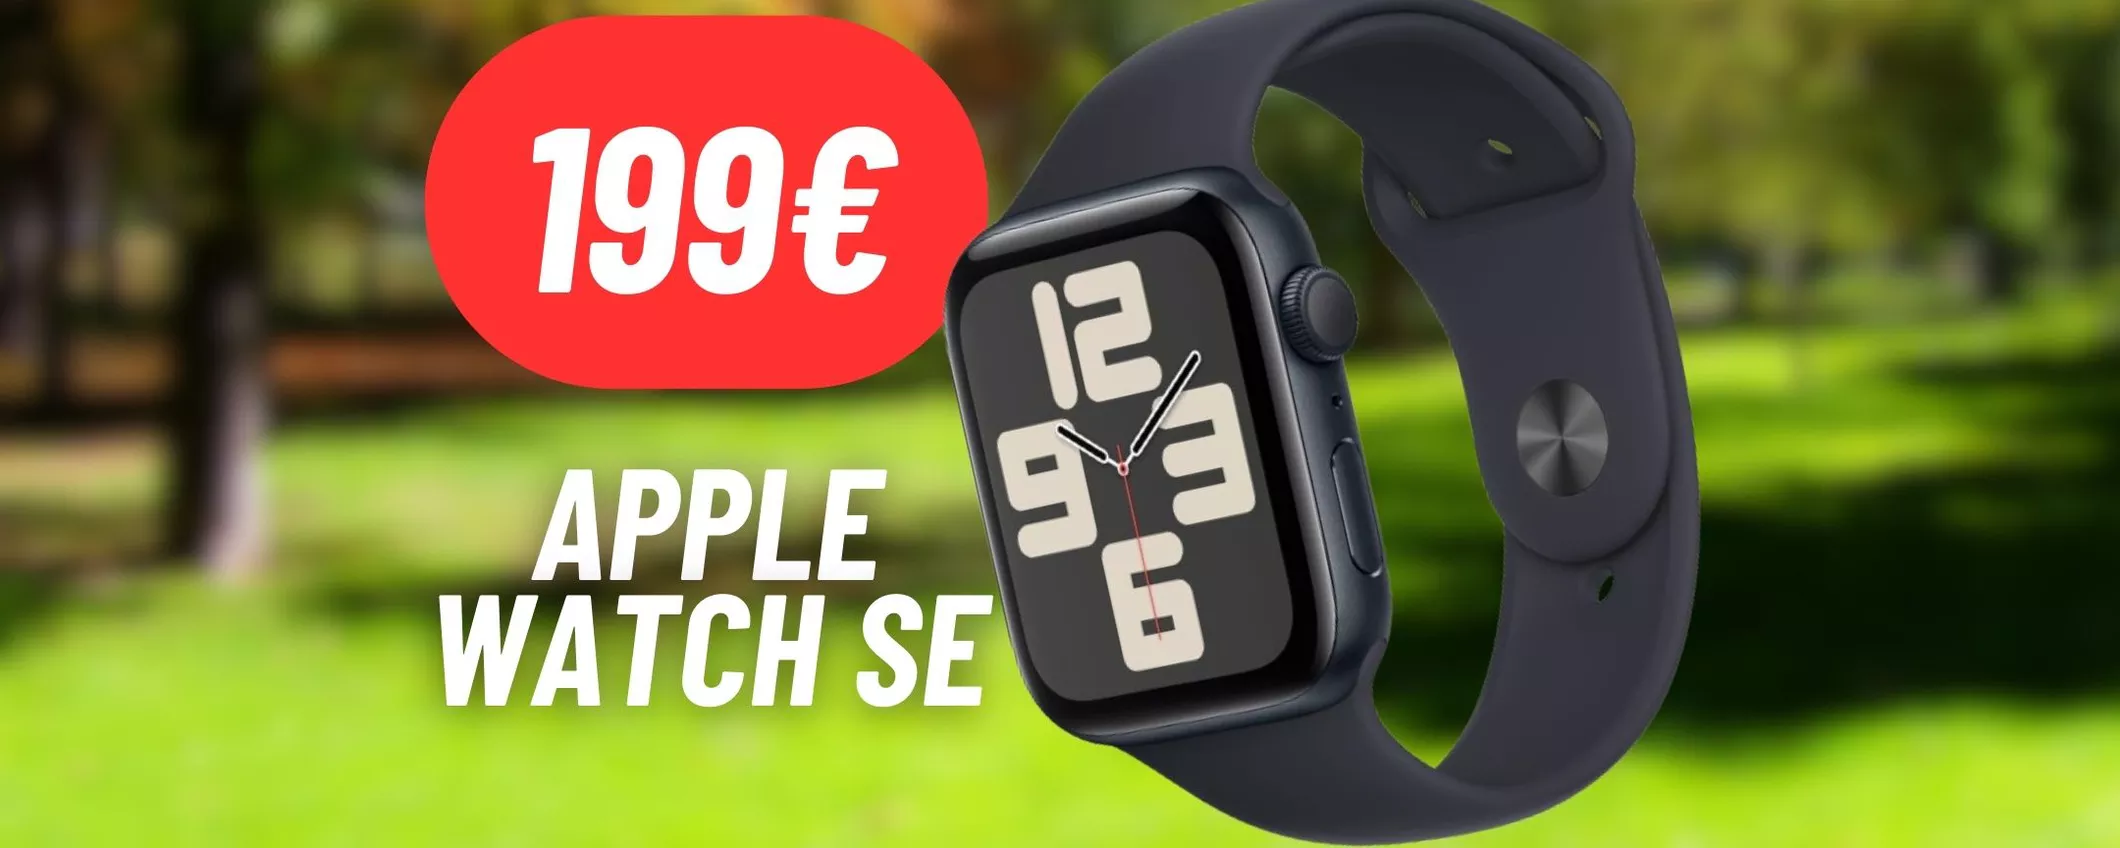 Apple Watch SE a 199€: offerta clamorosa su Amazon